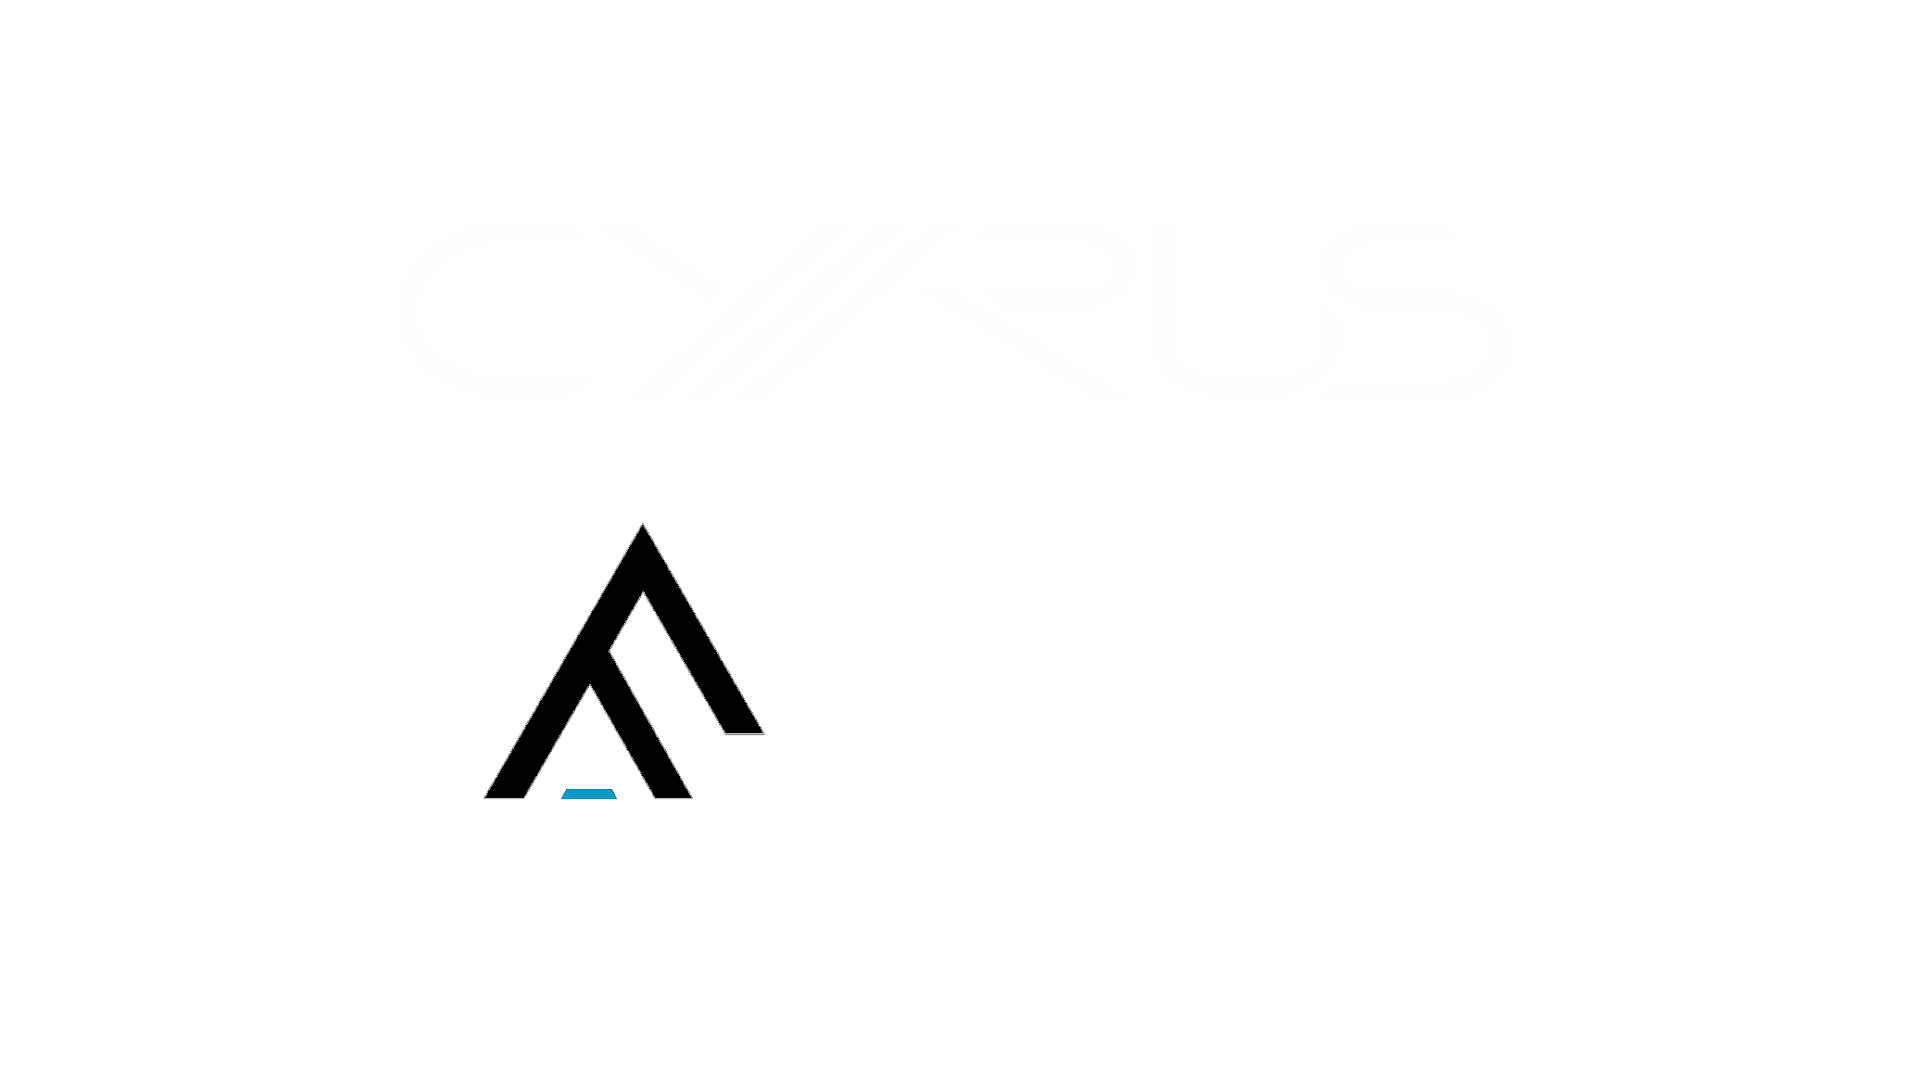 Cyrus + Fyne